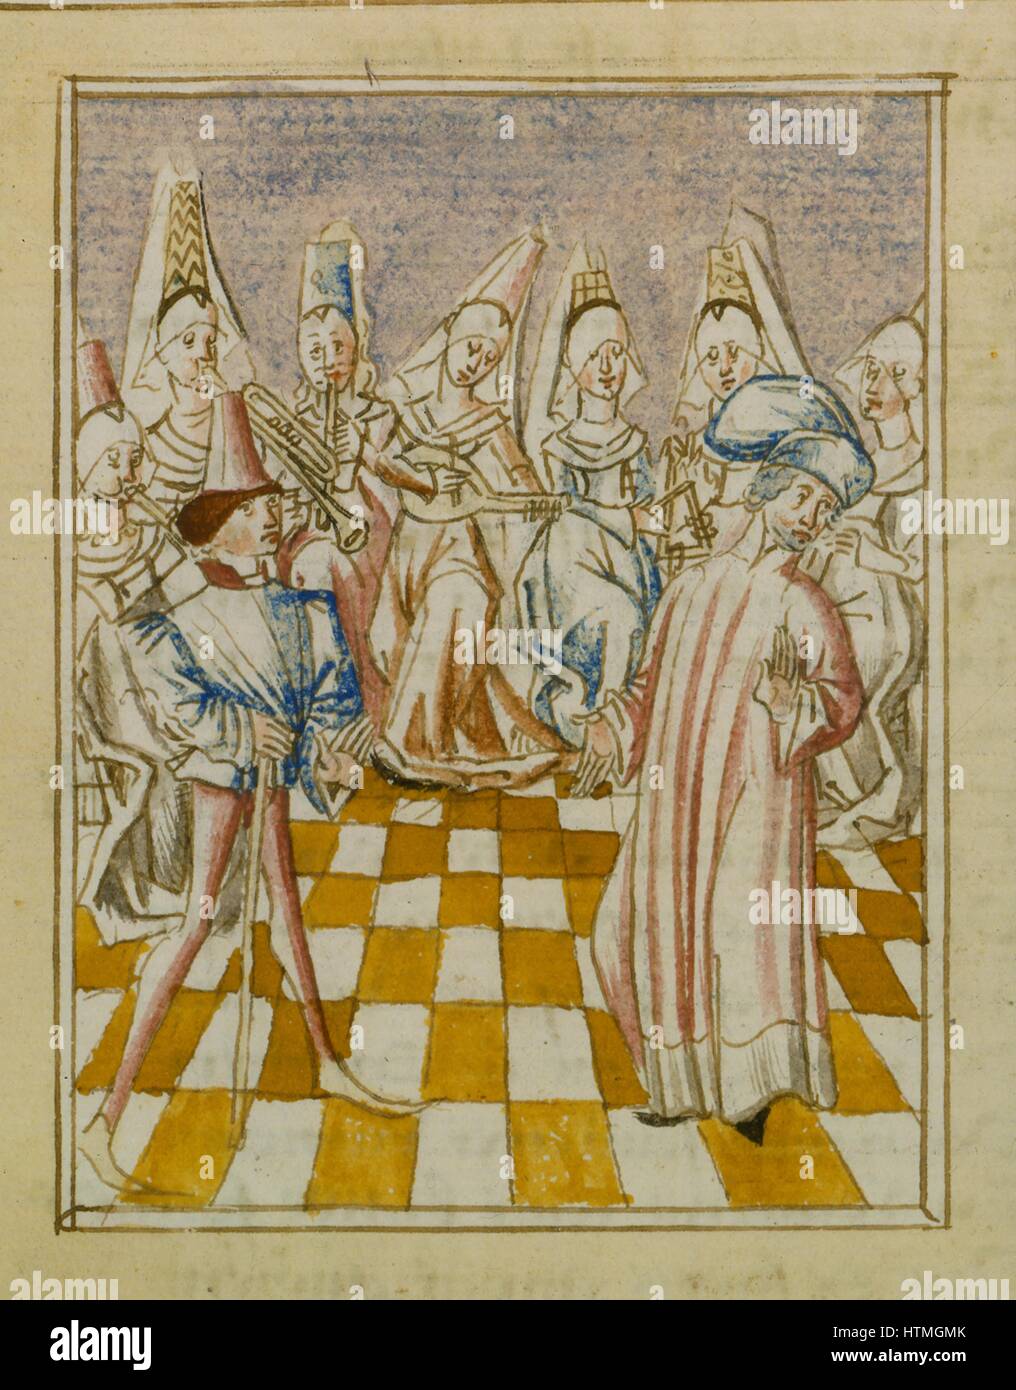 The Orchestra of Women: from 'Le livre de Champion des Dames' by Martin le Franc. 15th century French manuscript. Stock Photo